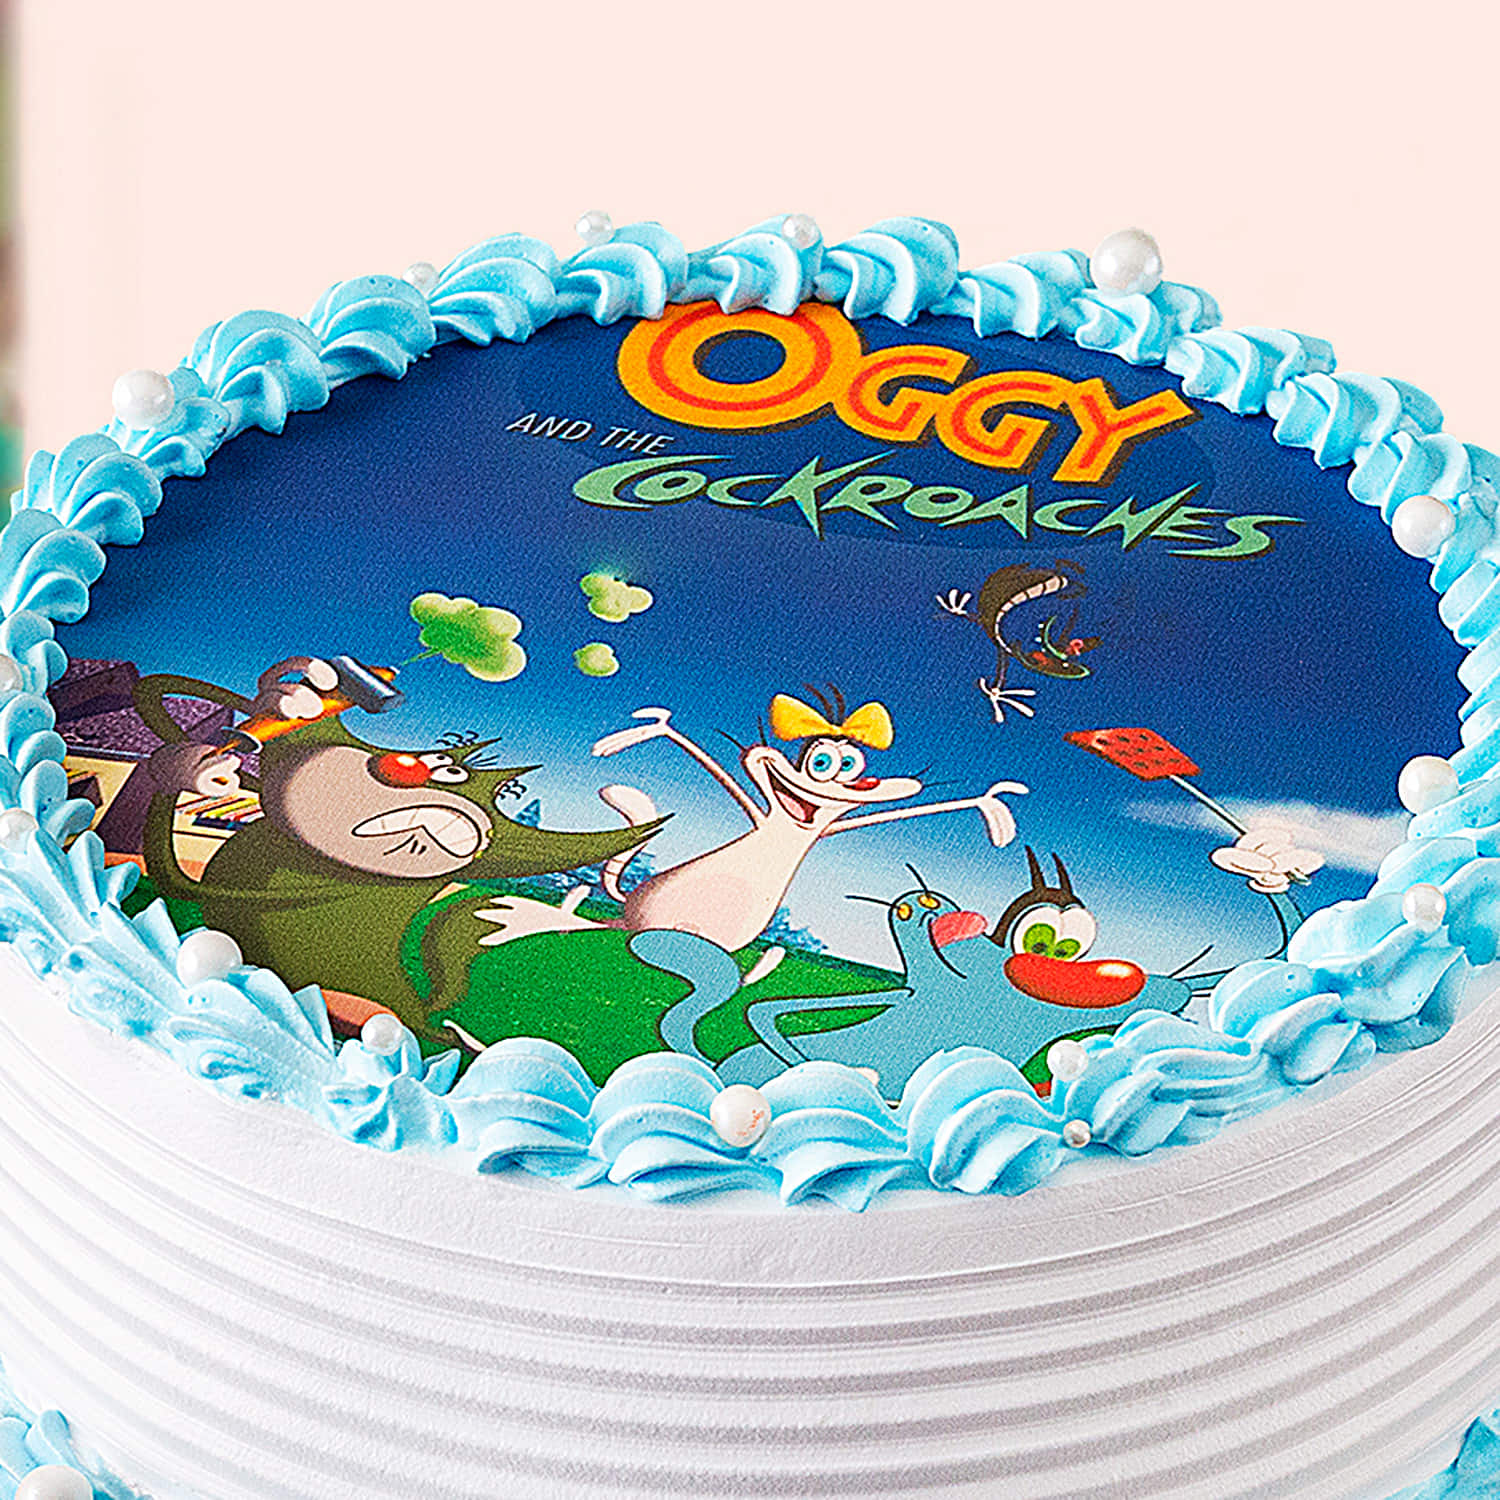 Gurugram Special: Oggy Cartoon Round Photo Cake Online Delivery in Gurugram